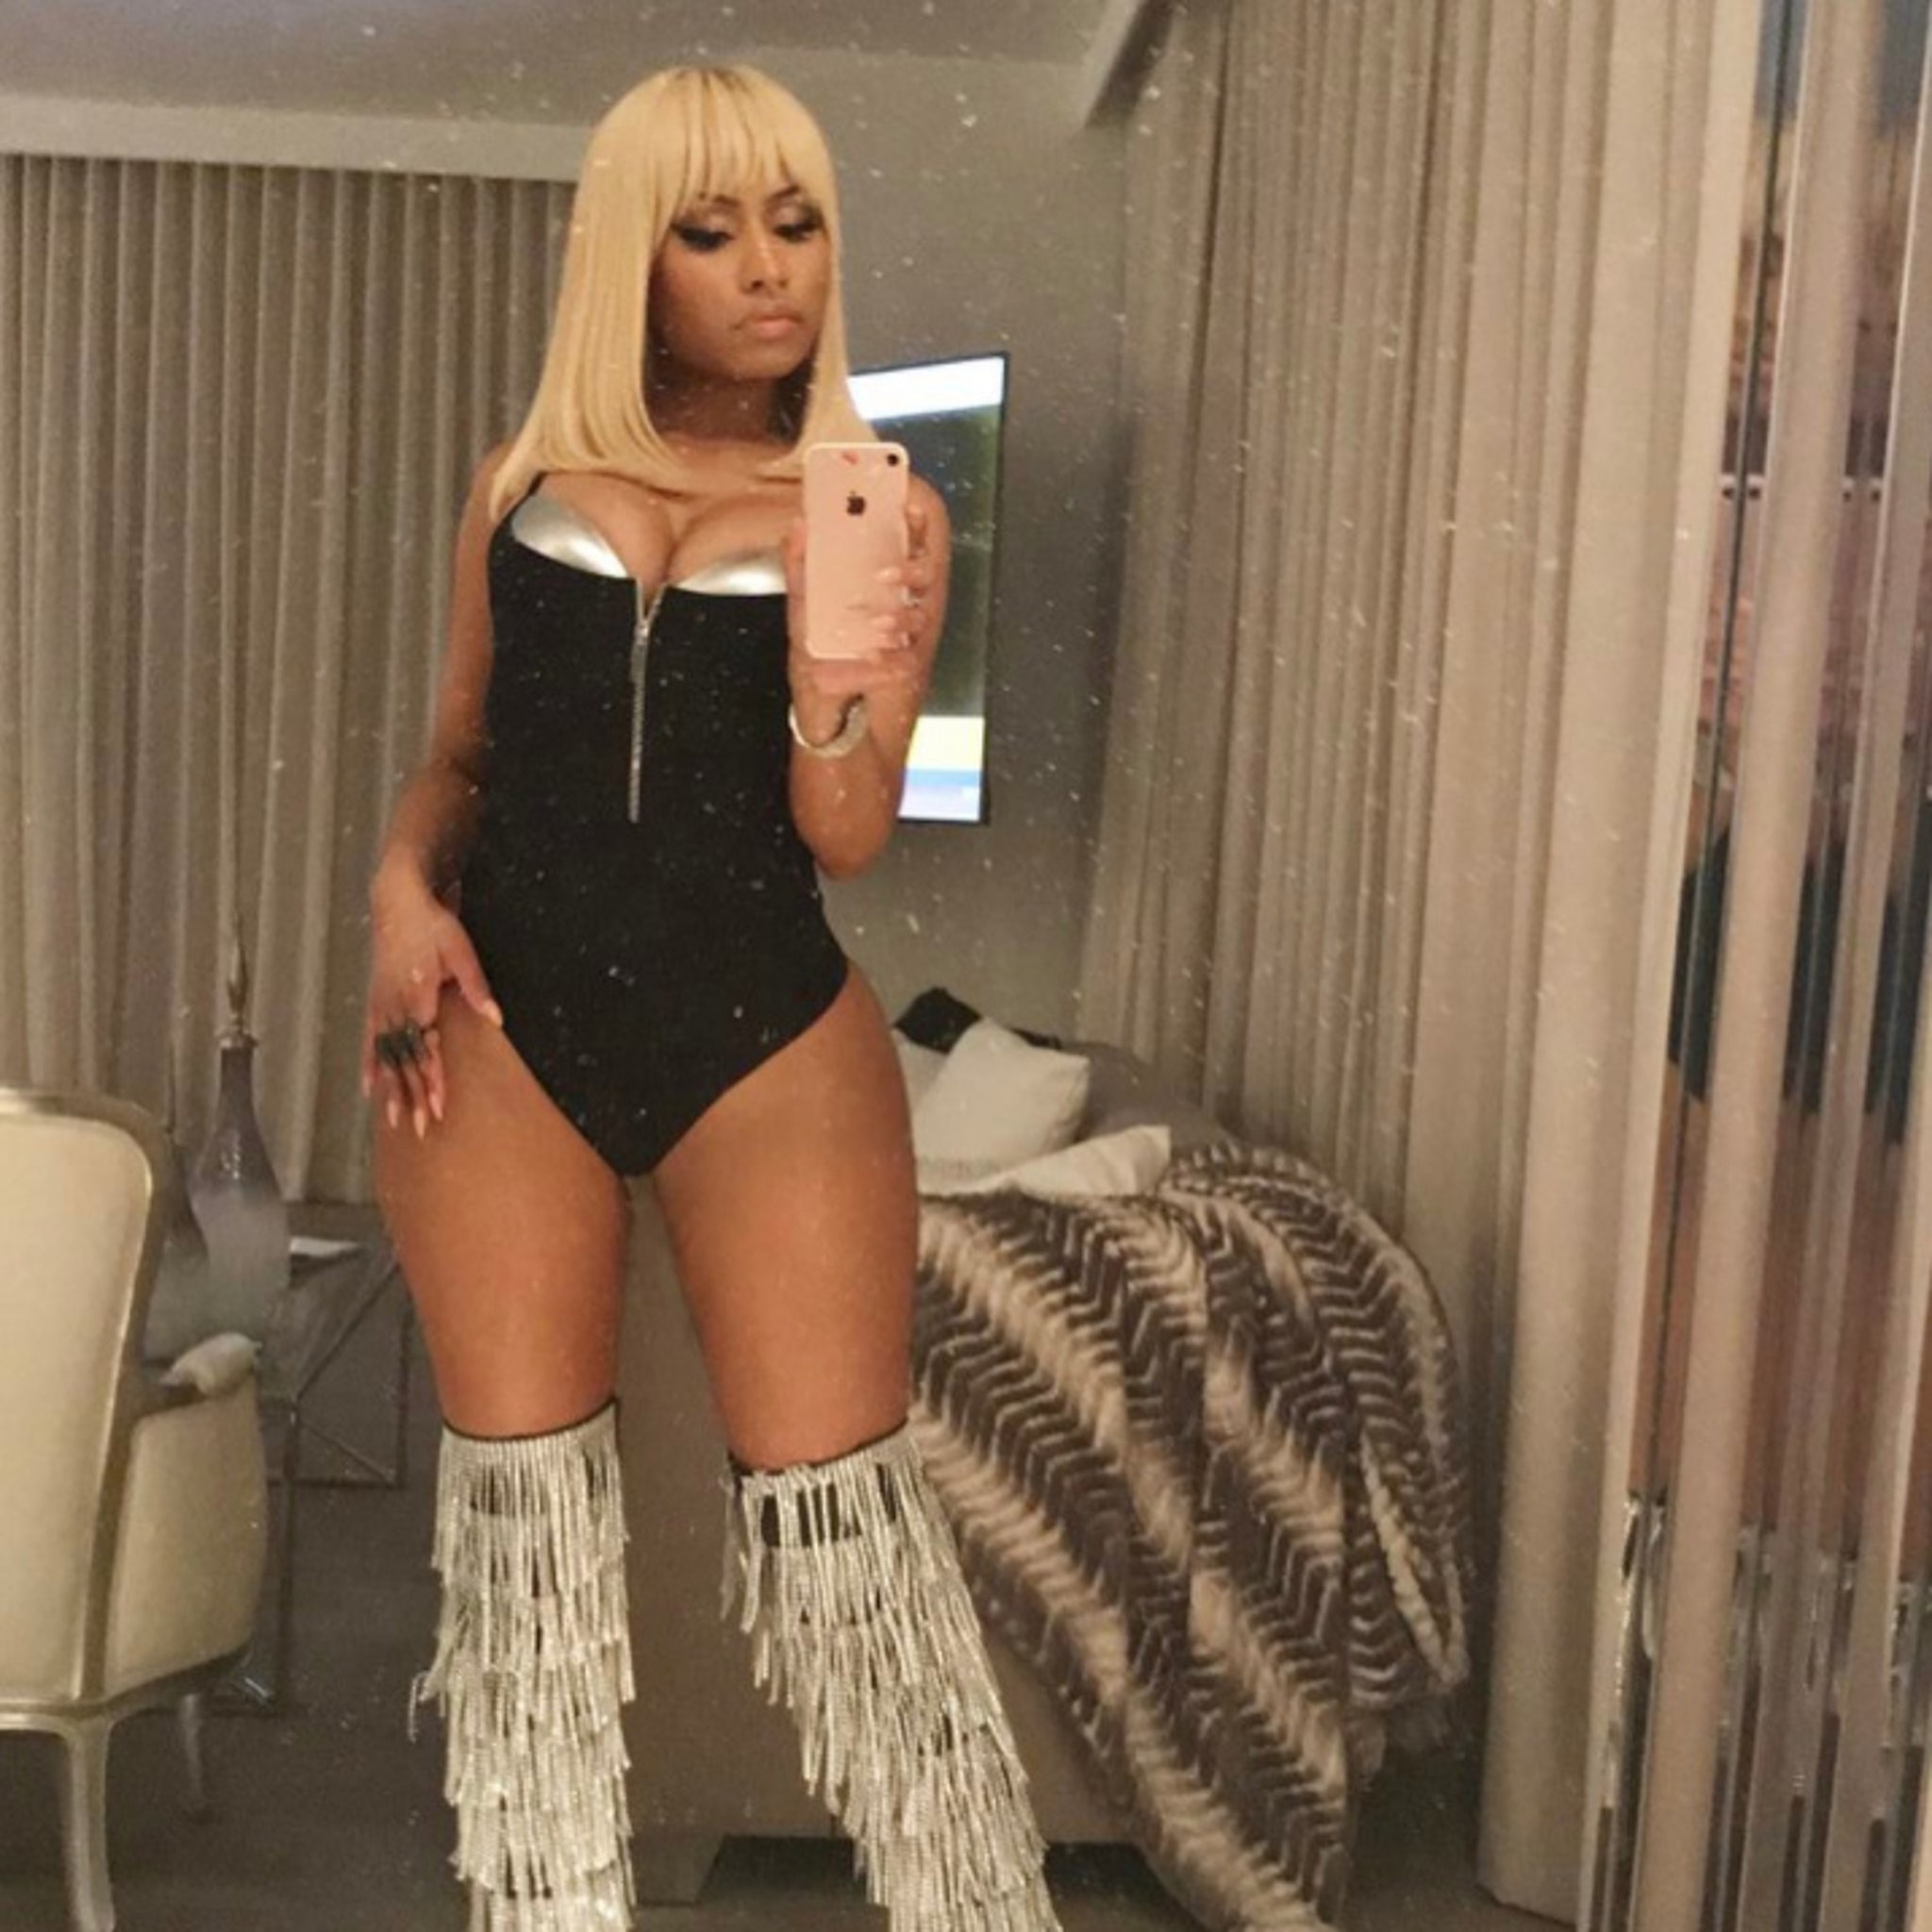 Nicki Minaj PUSHES Fan At Meet-And-Greet, Days After Cardi B Unloaded On  Concertgoer